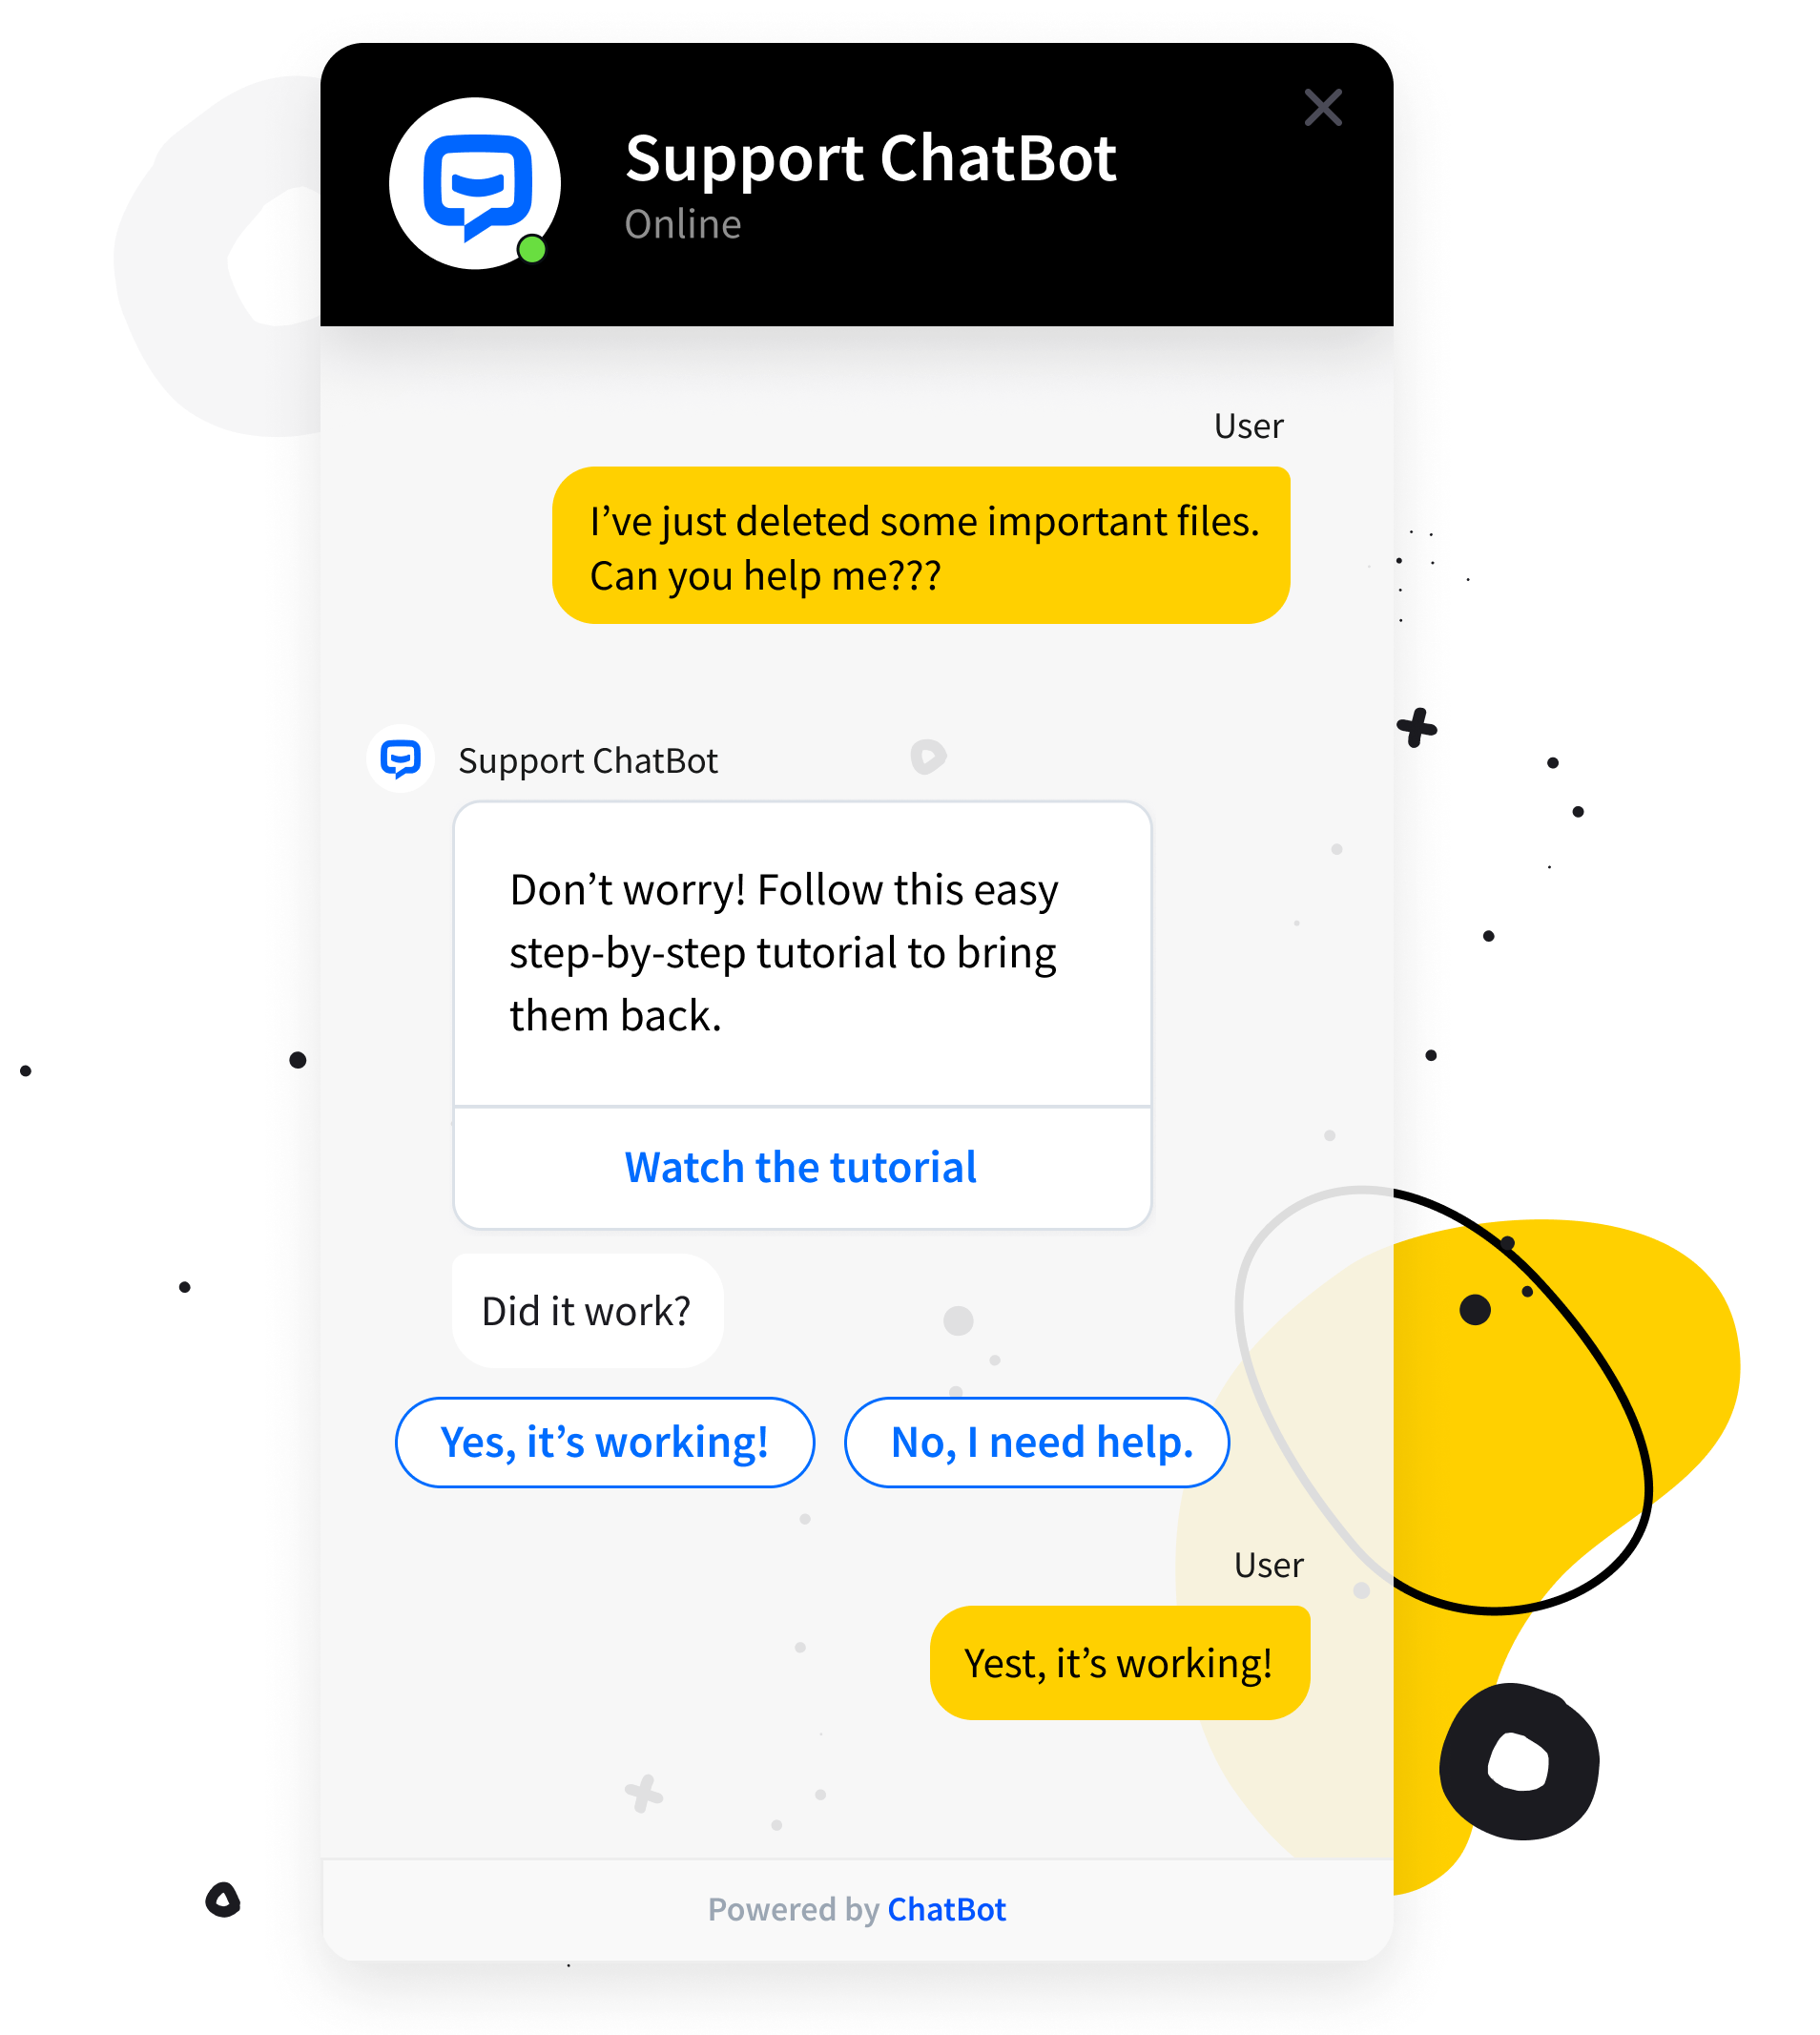 b2b chatbot examples